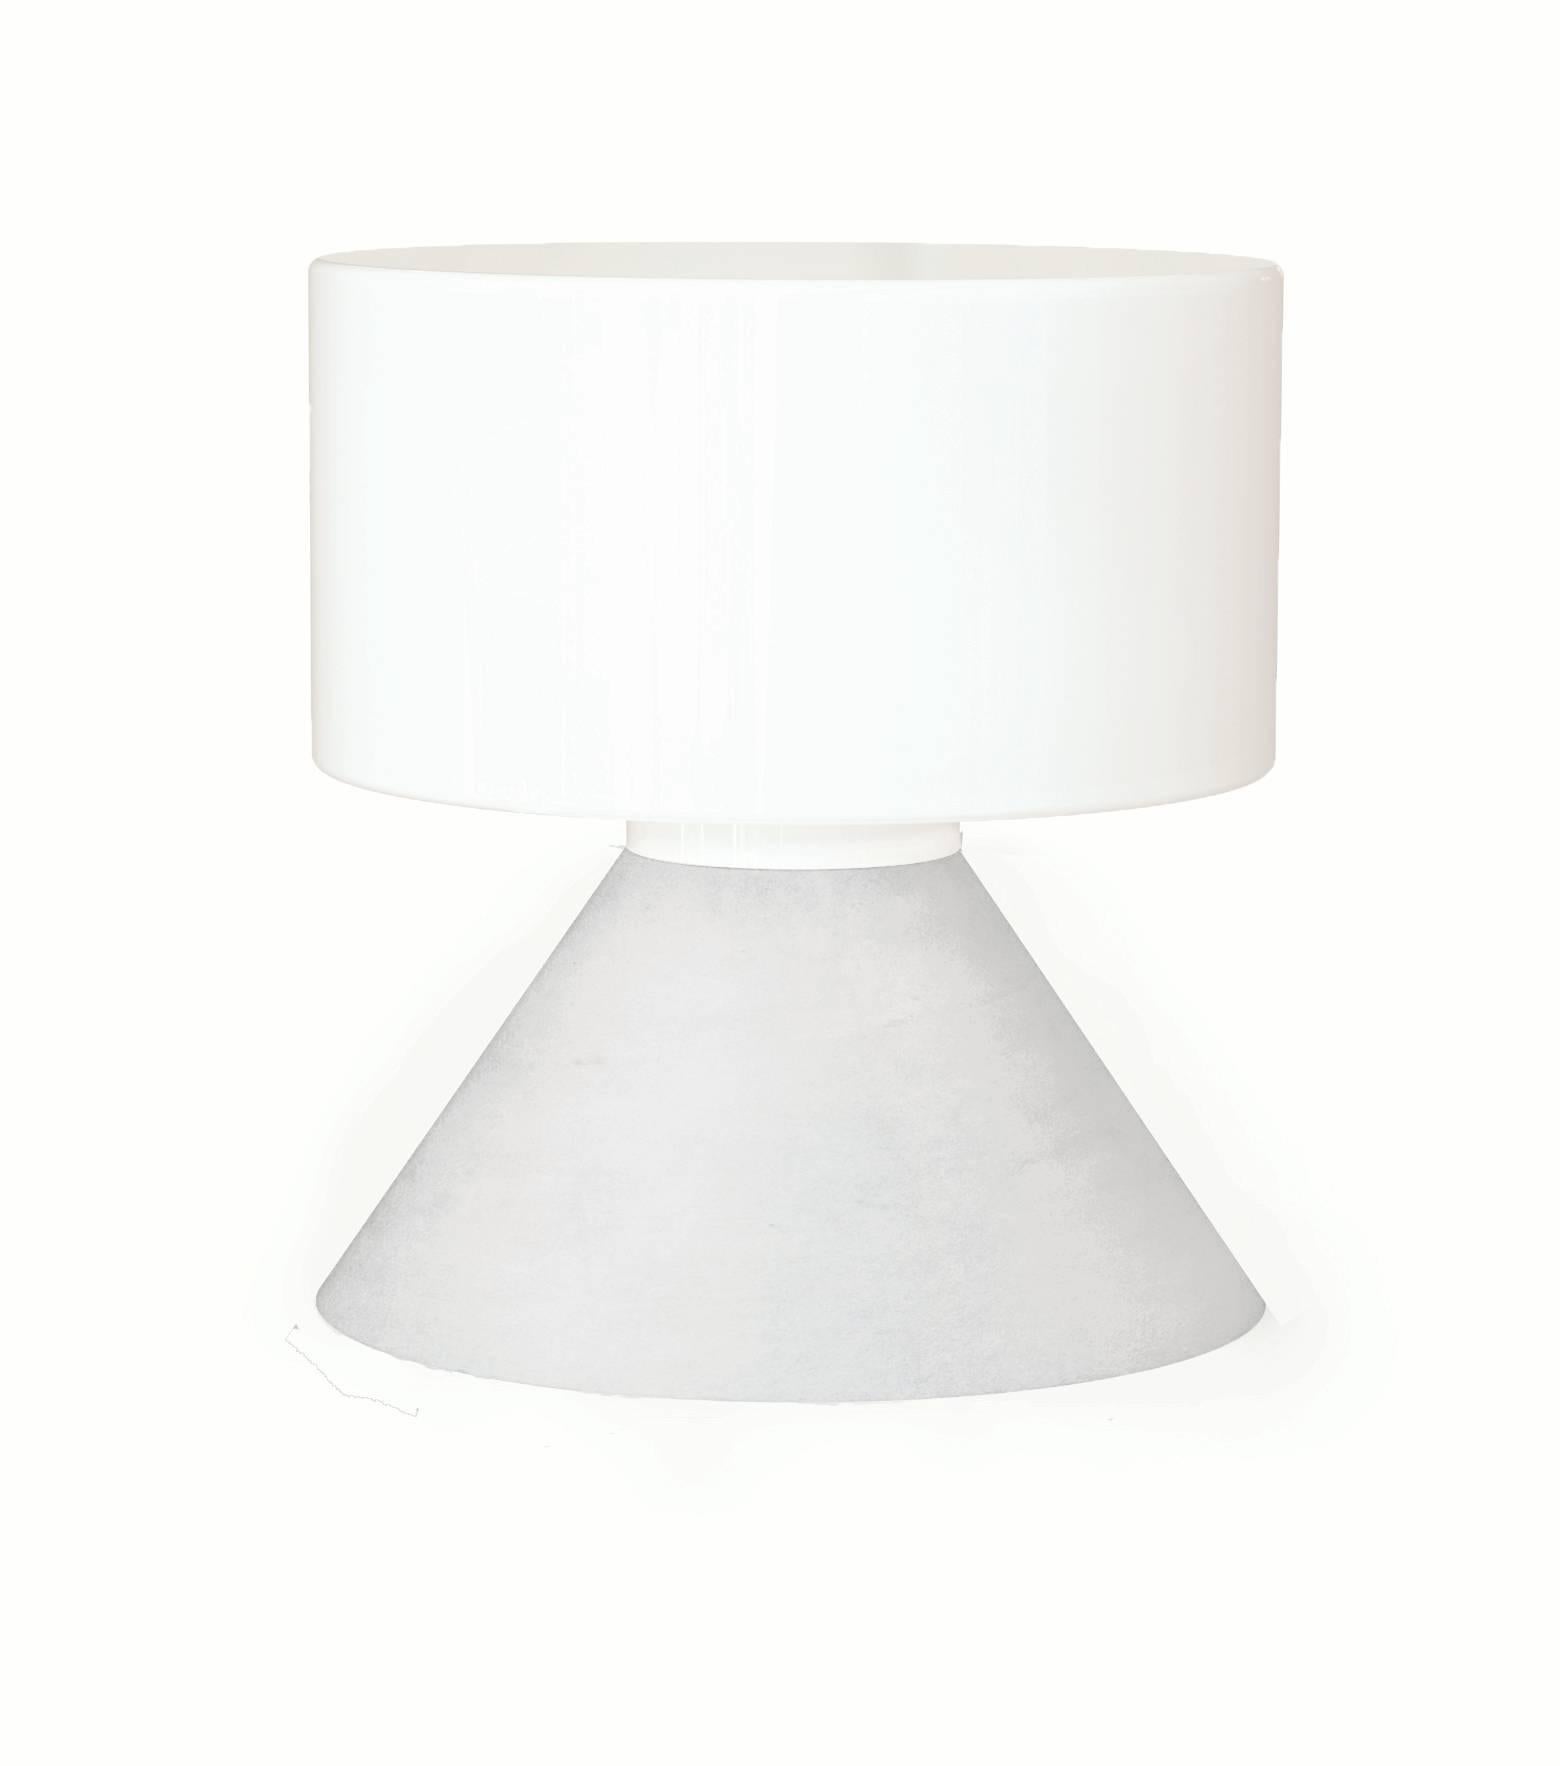 Samuli Naamanka 'Concrete' Table Lamp in Dark Gray for Innolux Oy 2